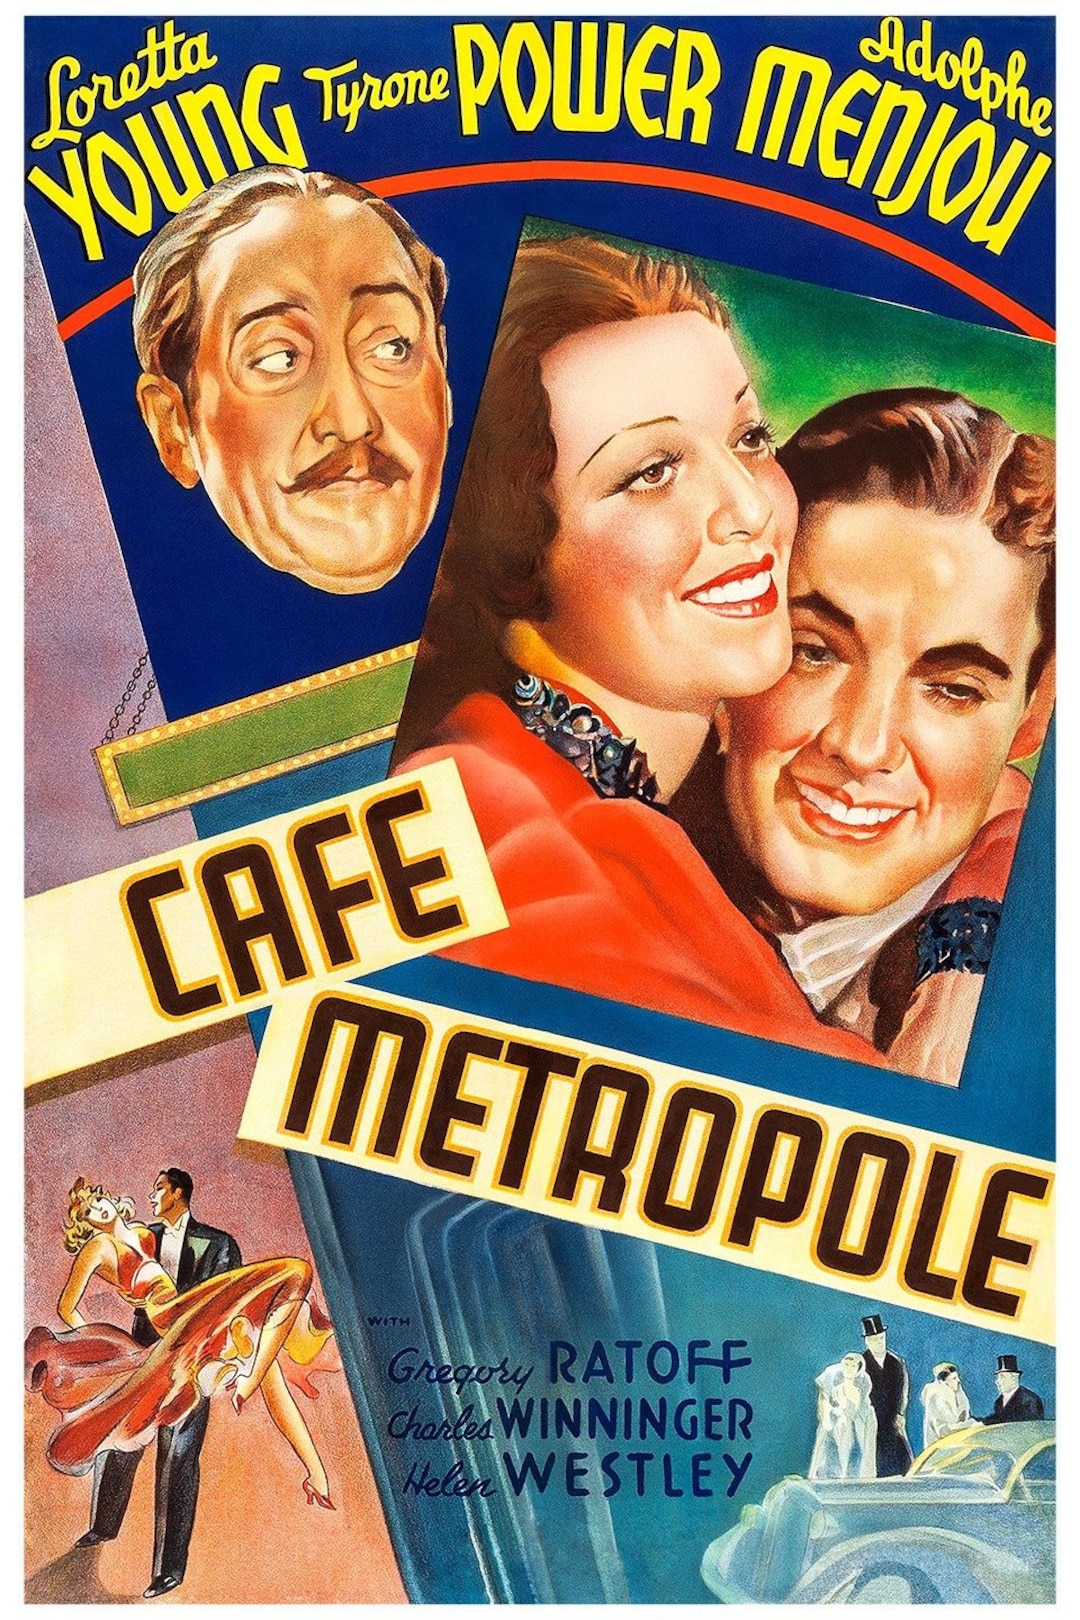 Cafe Metropole 1937 Loretta Young / Tyrone Power image